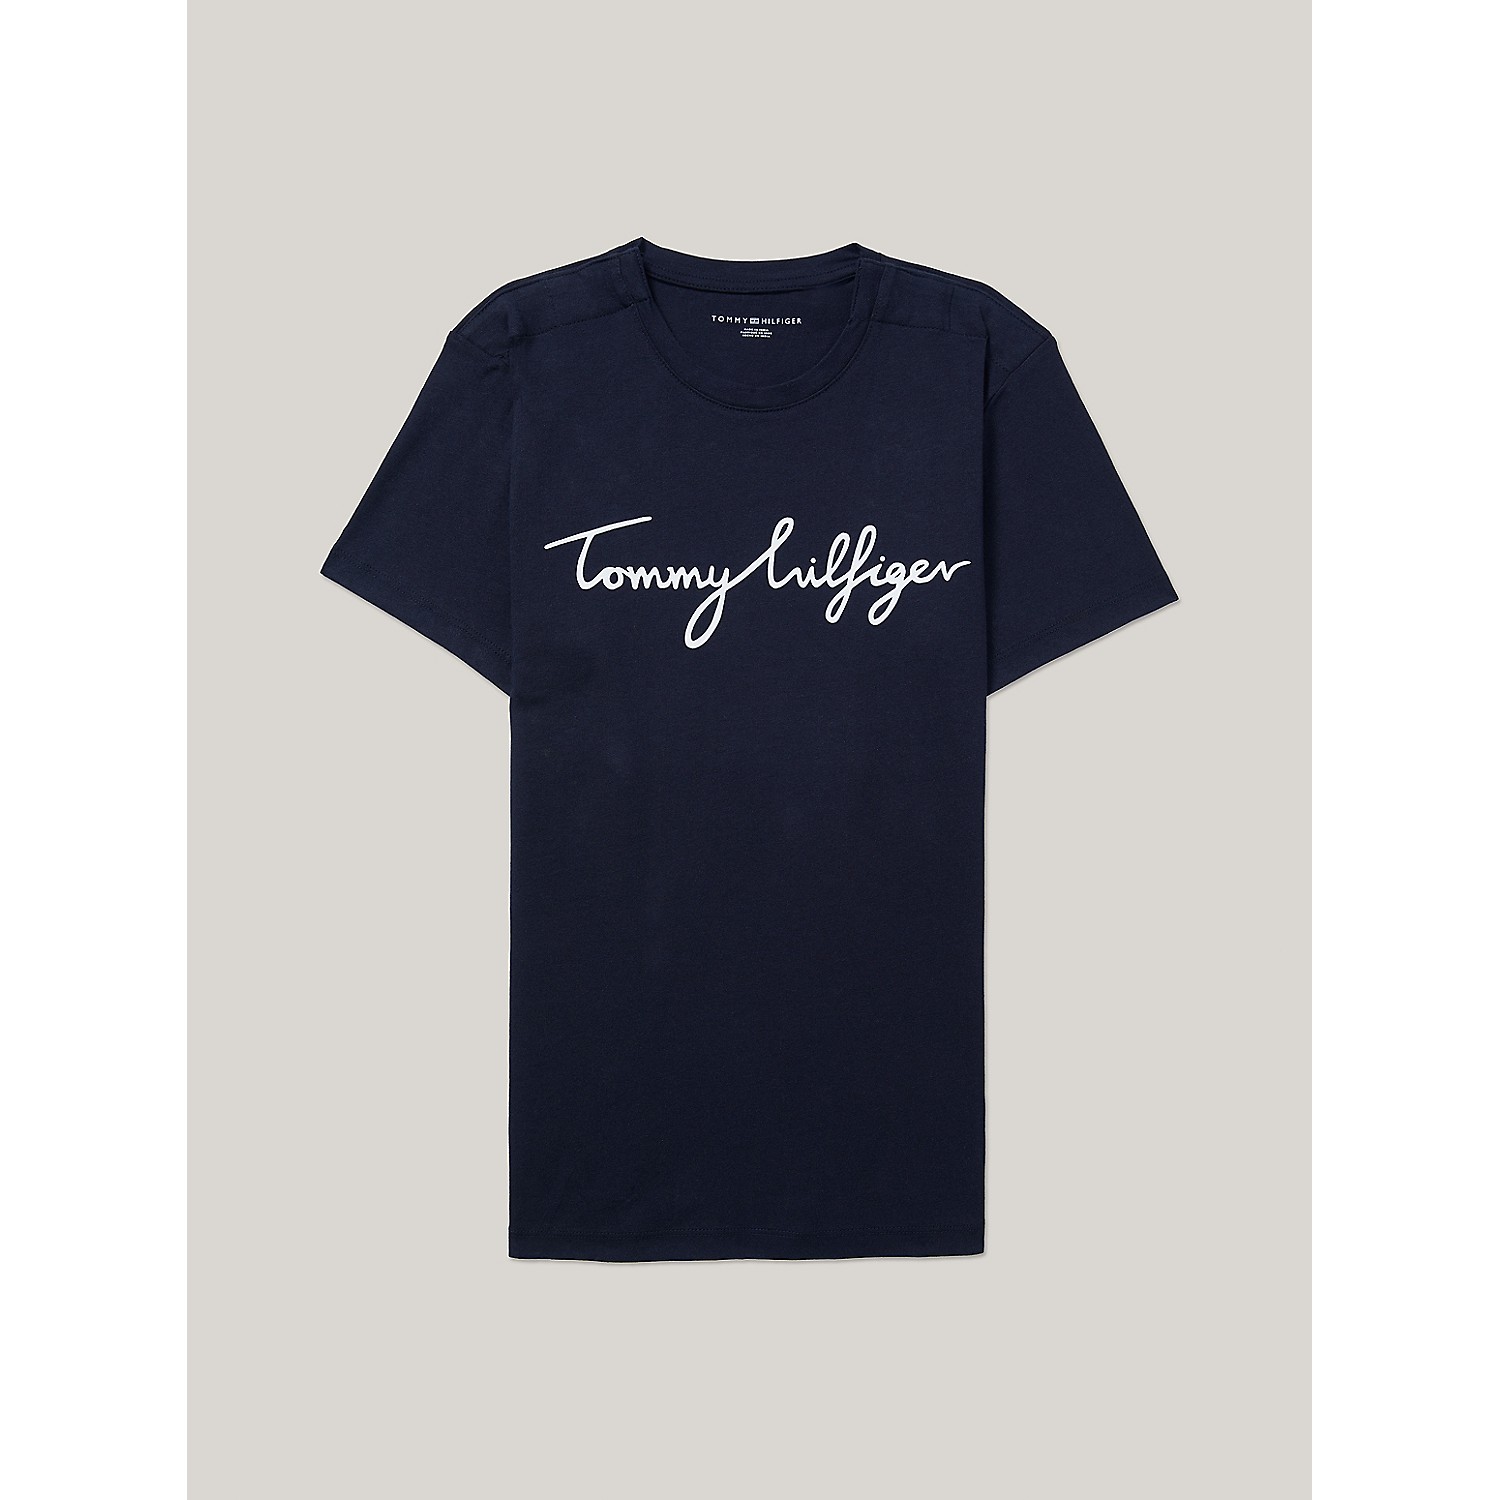 TOMMY HILFIGER Hilfiger Logo T-Shirt